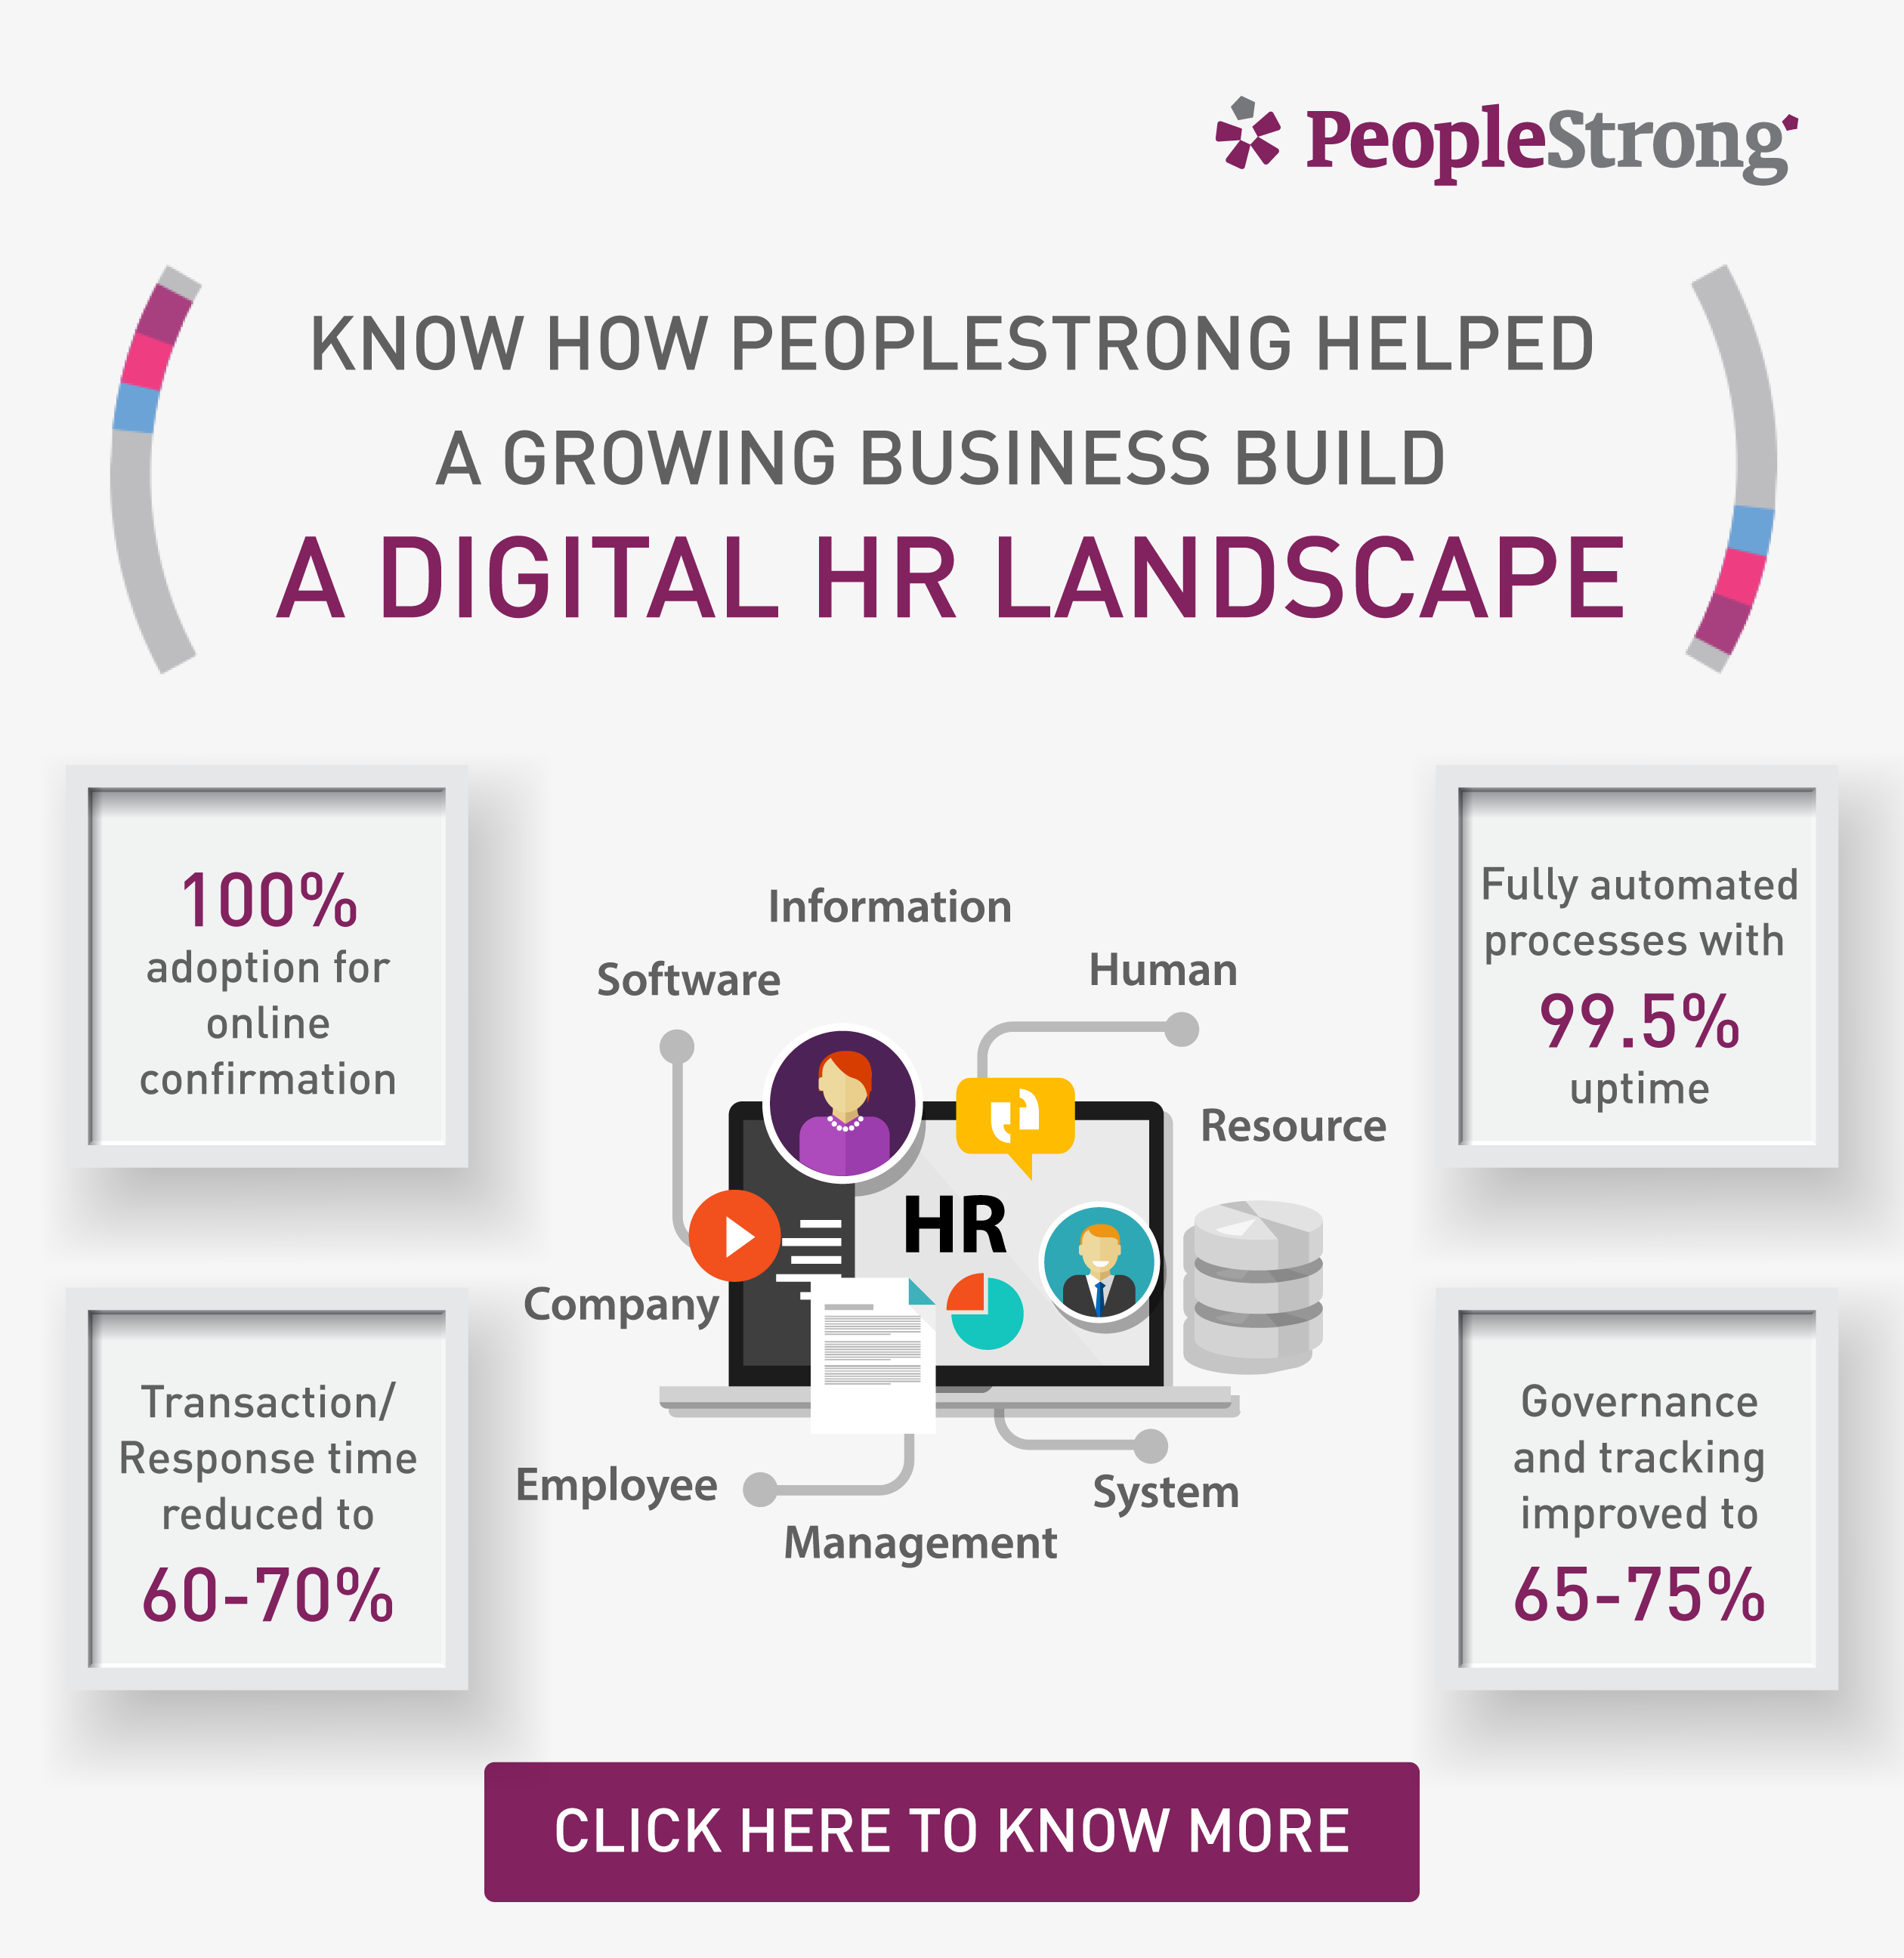 Building a digital HR landscape for a growing business